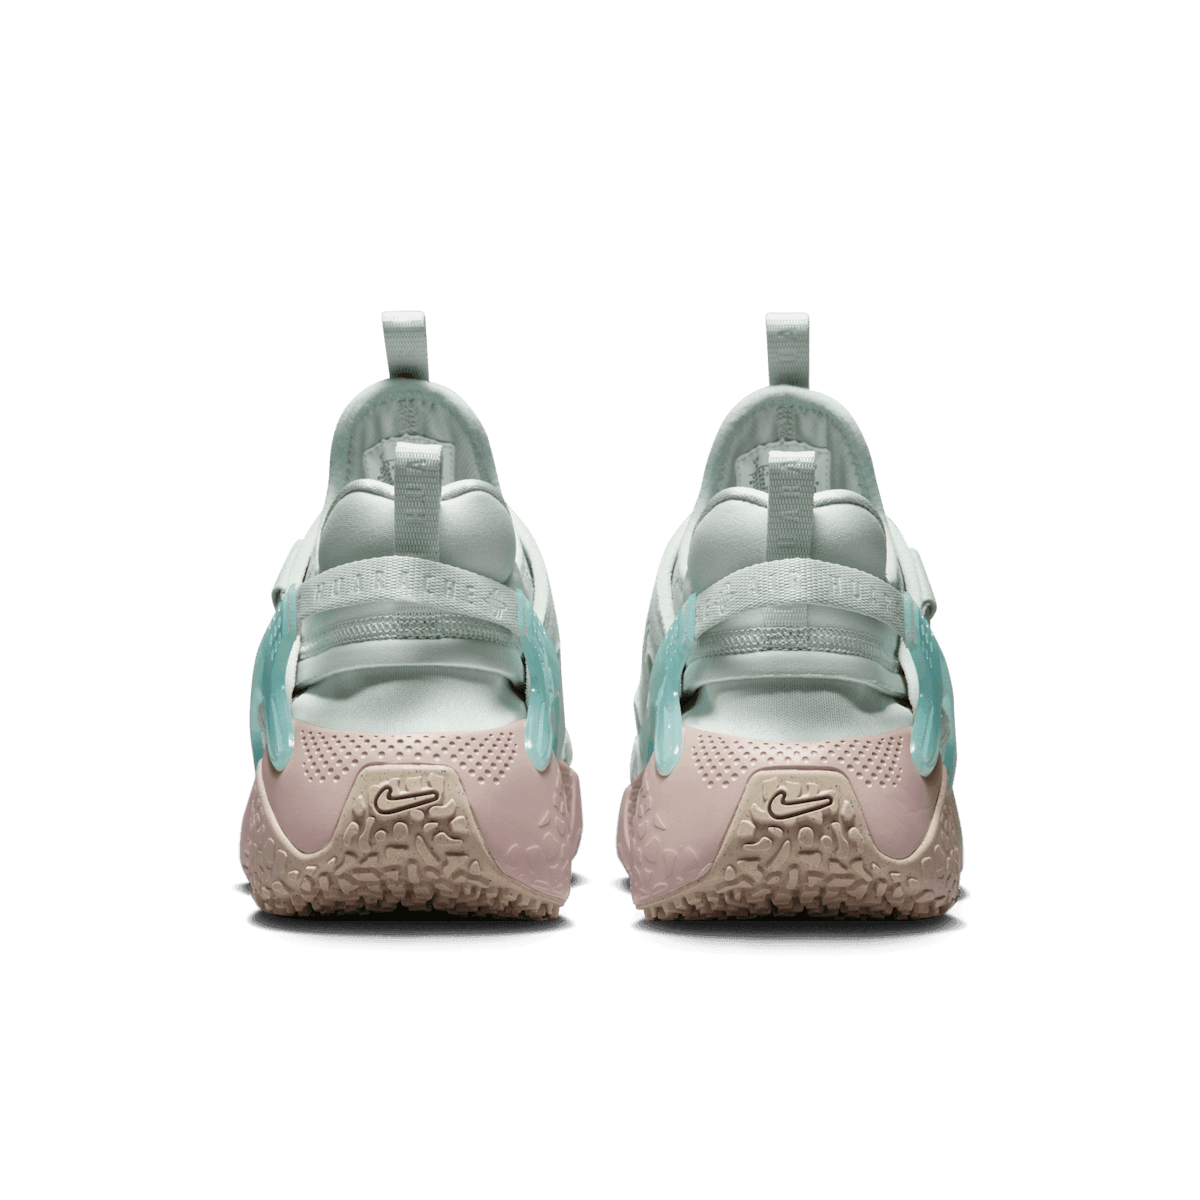 The Nike Air Huarache Craft Light Silver Citron Tint Ushers In A New Era